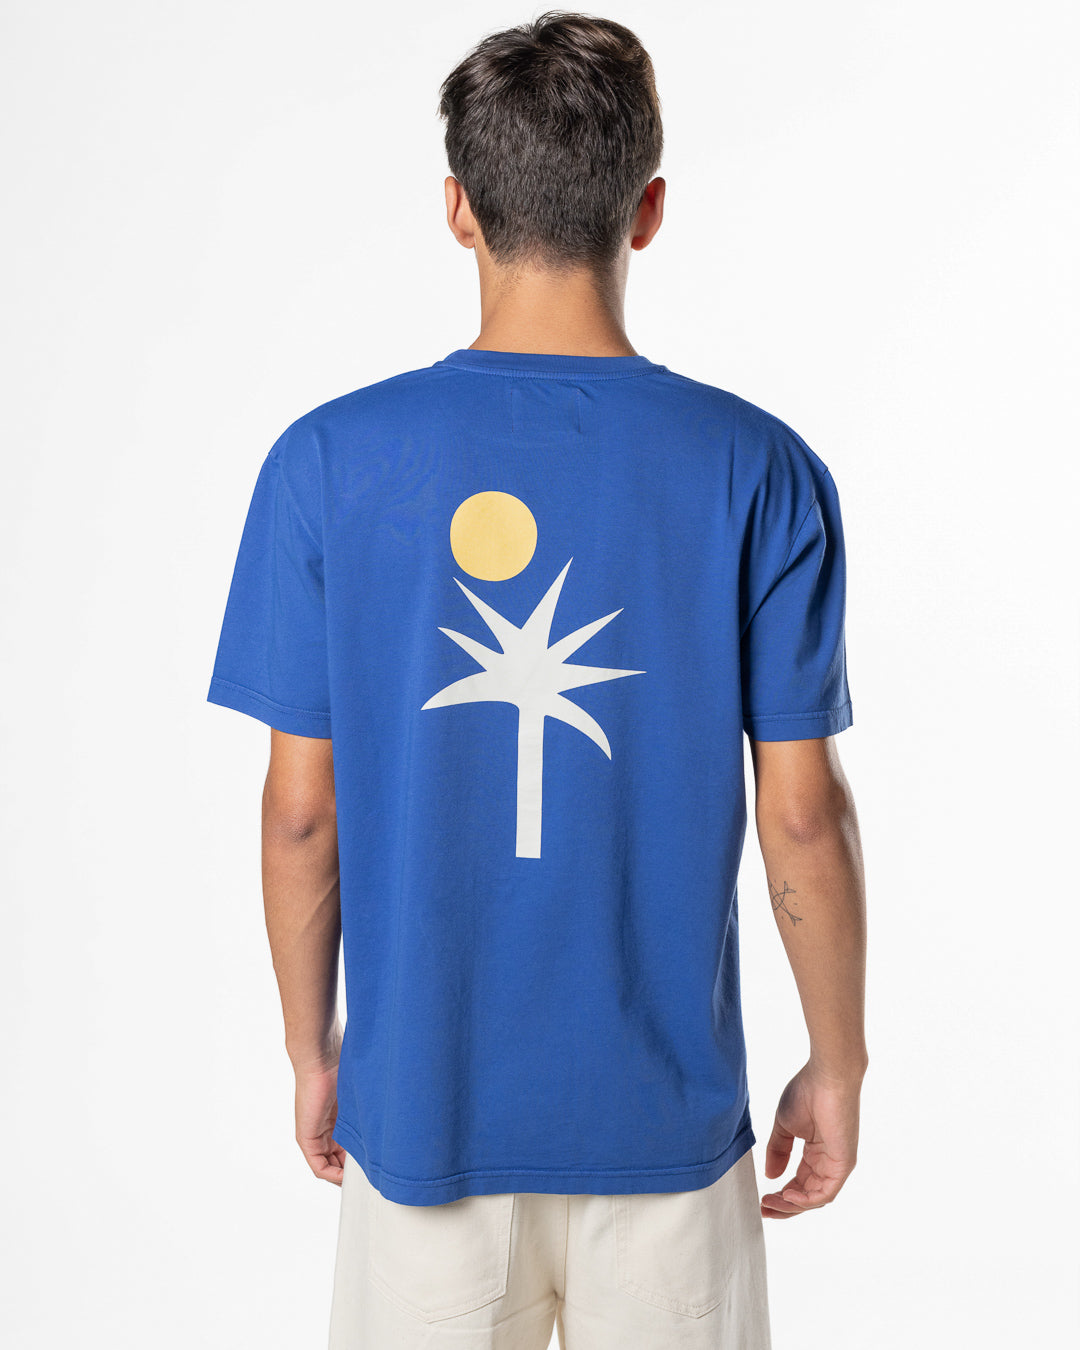 DANTAS Palm Blue T-Shirt